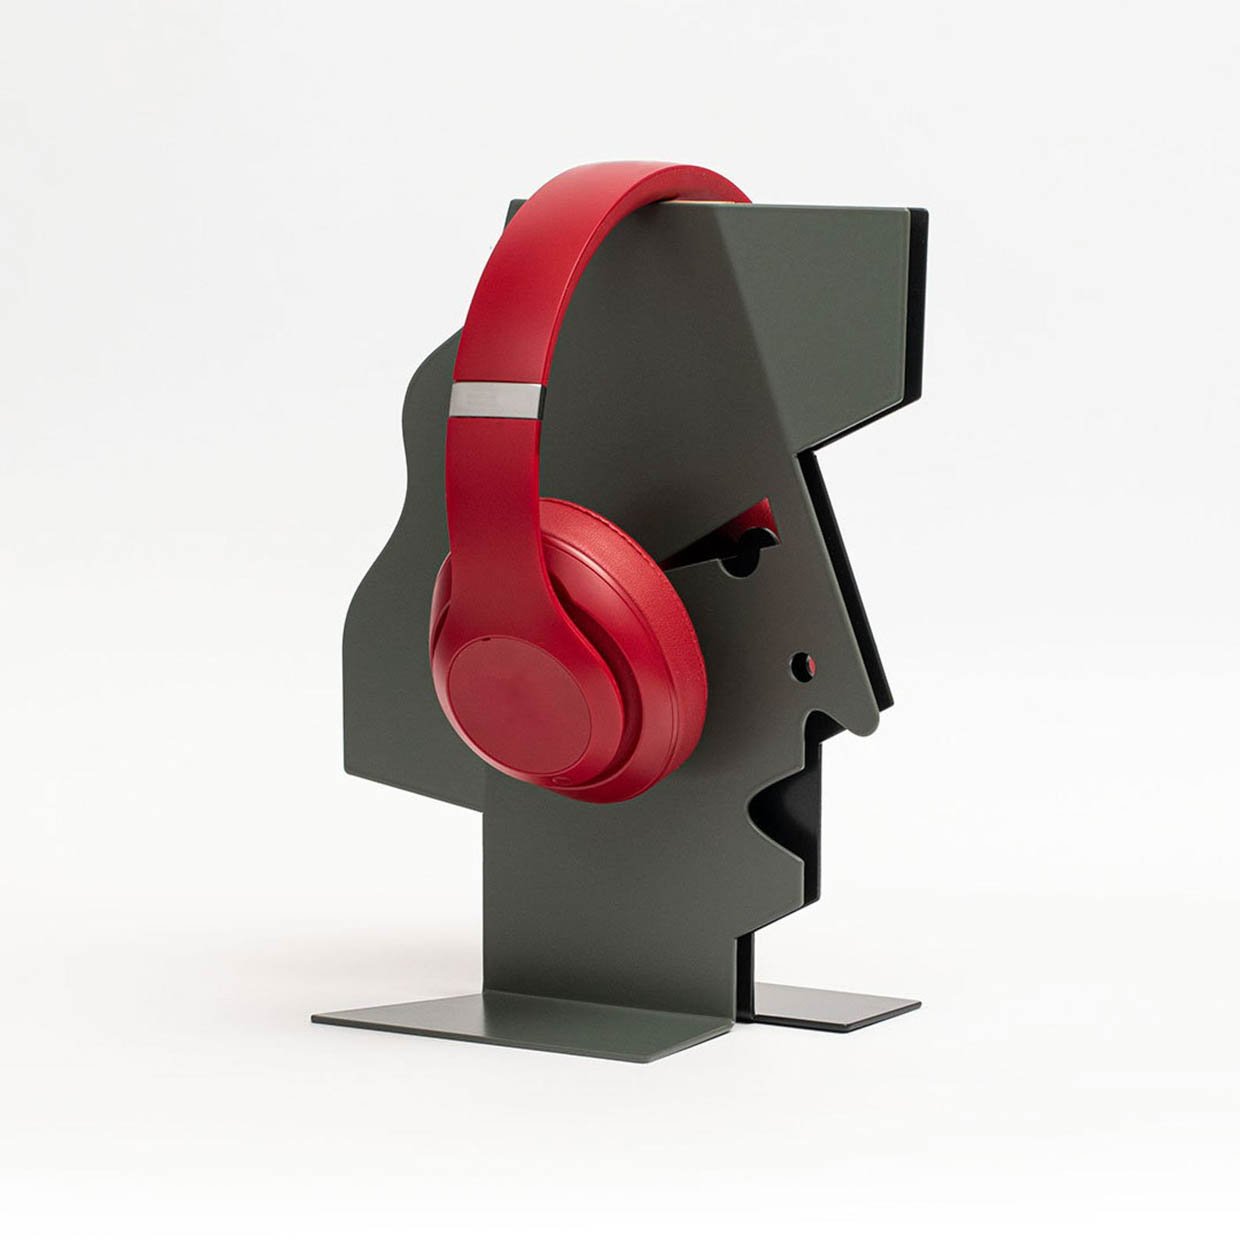 Nor-man Headphone Stand